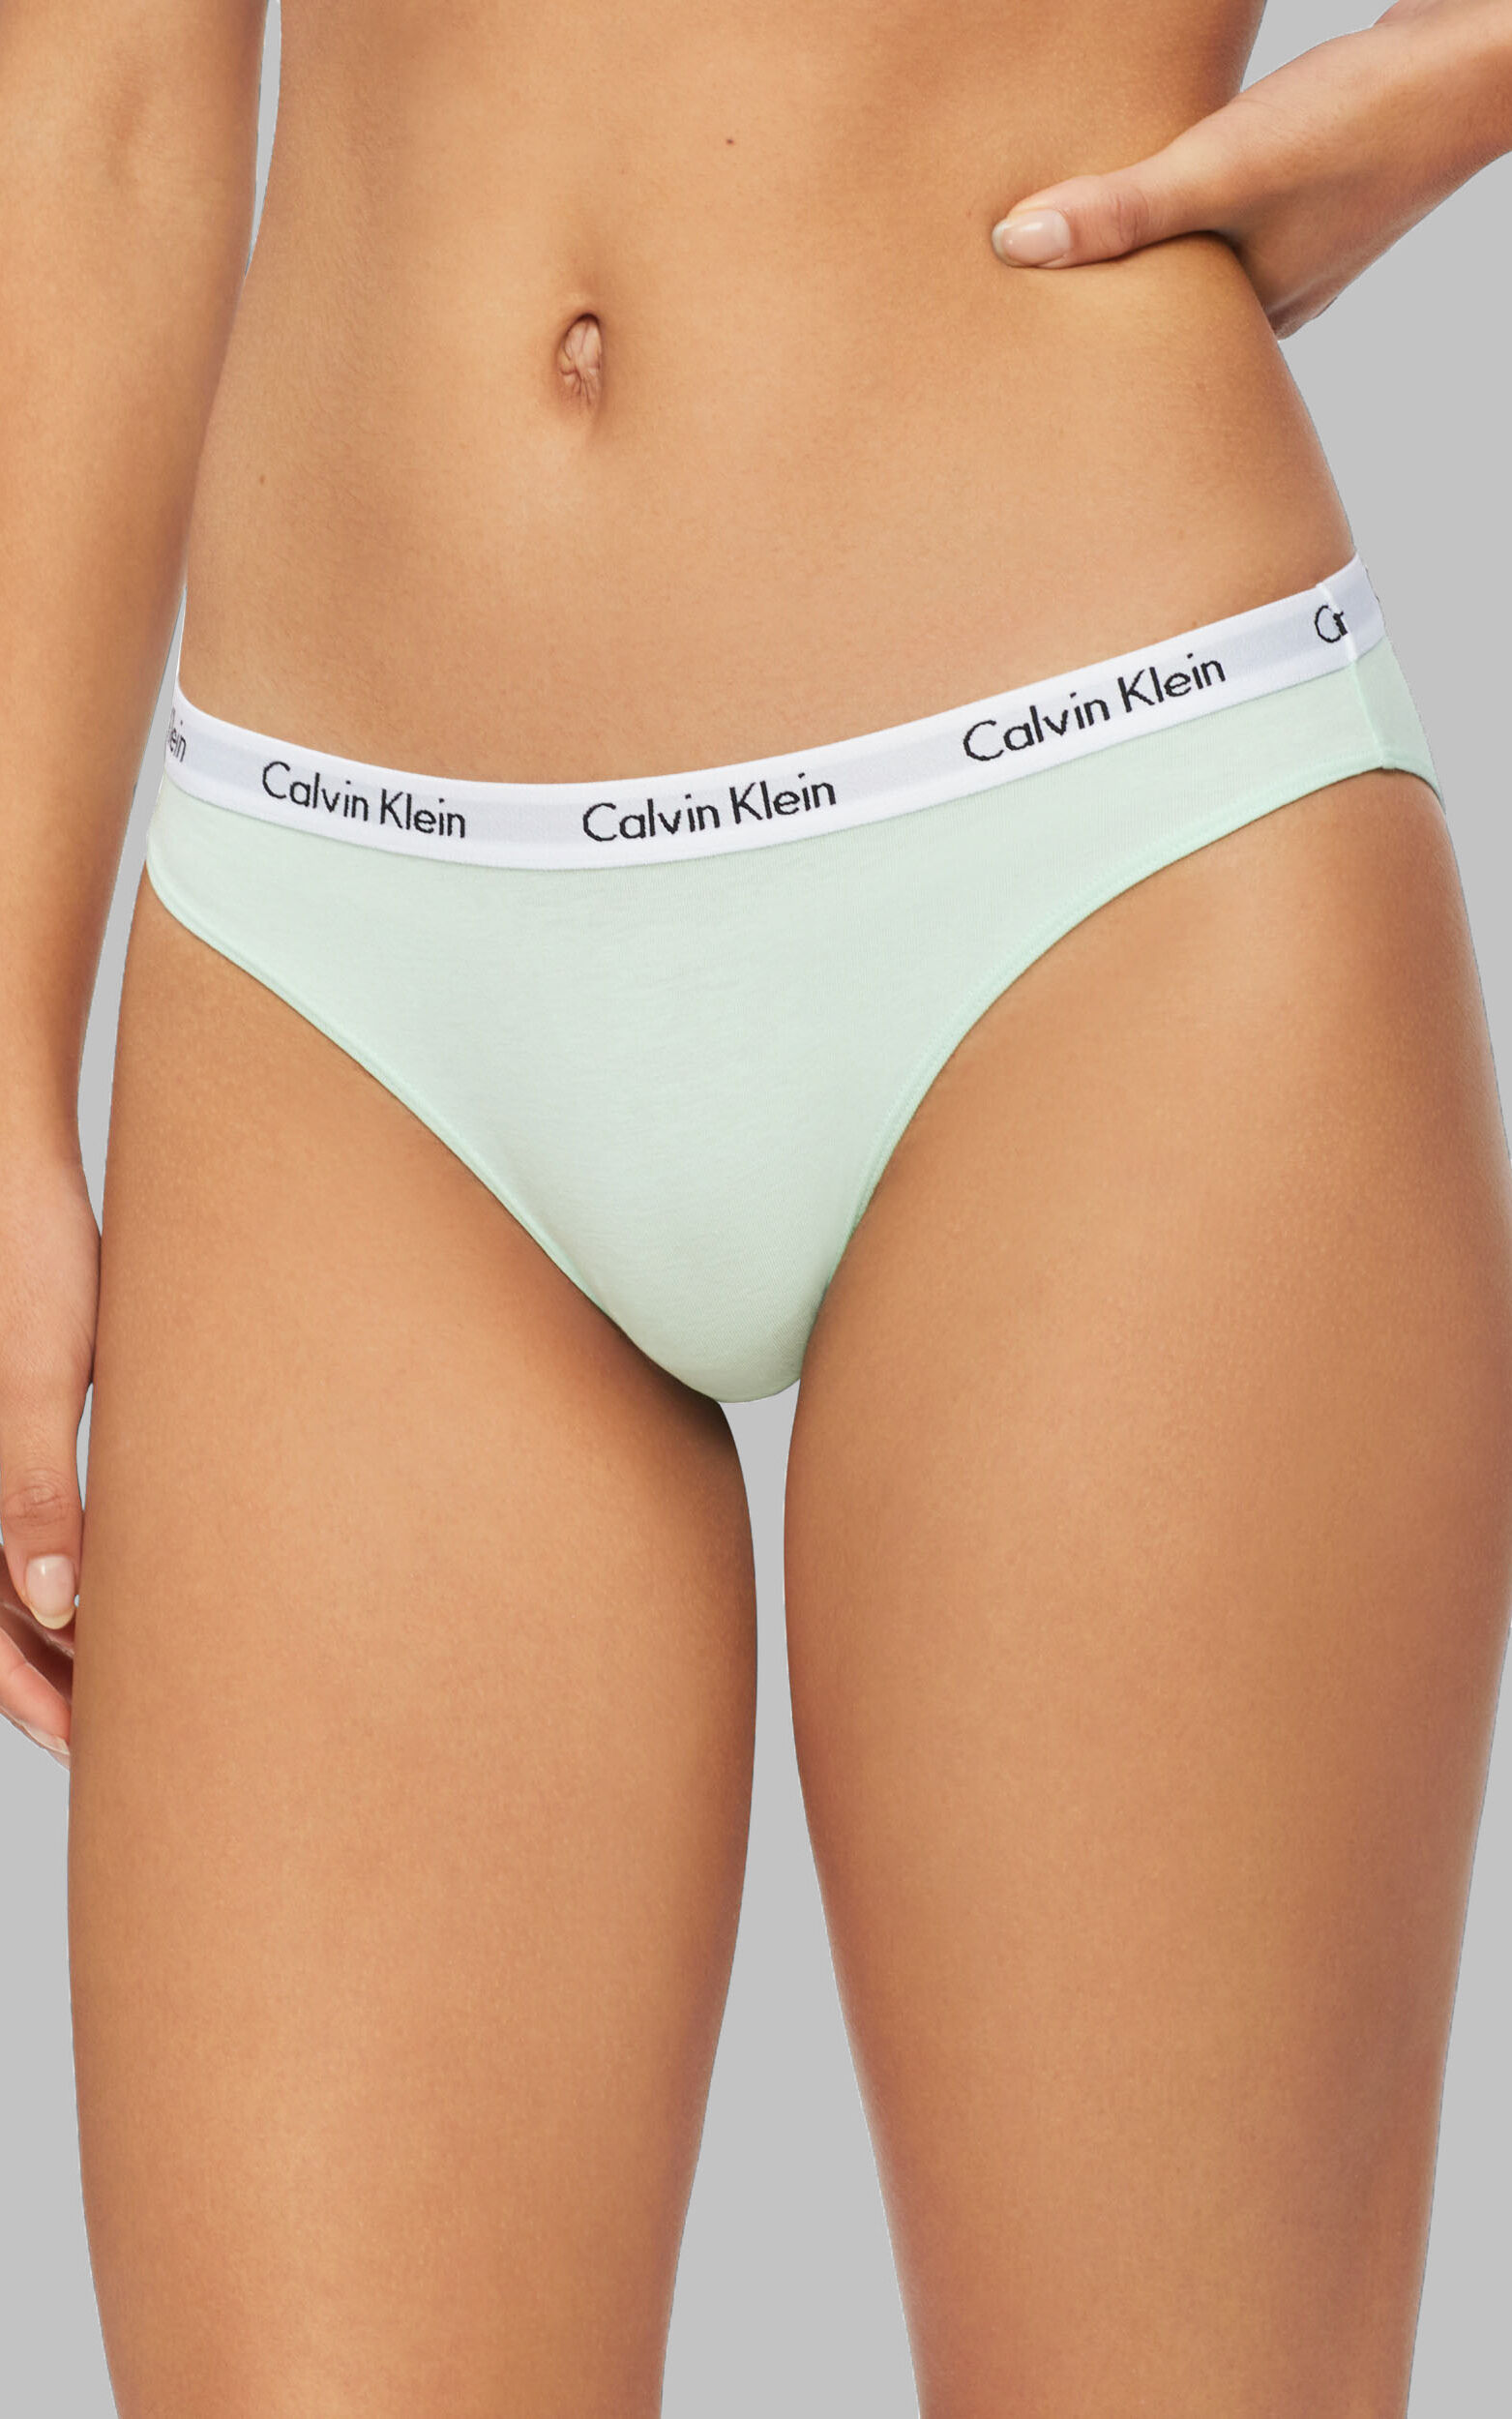 Calvin Klein - Pride Carousel Bikini 5 pack in Multi Pack - L, MLT1, super-hi-res image number null